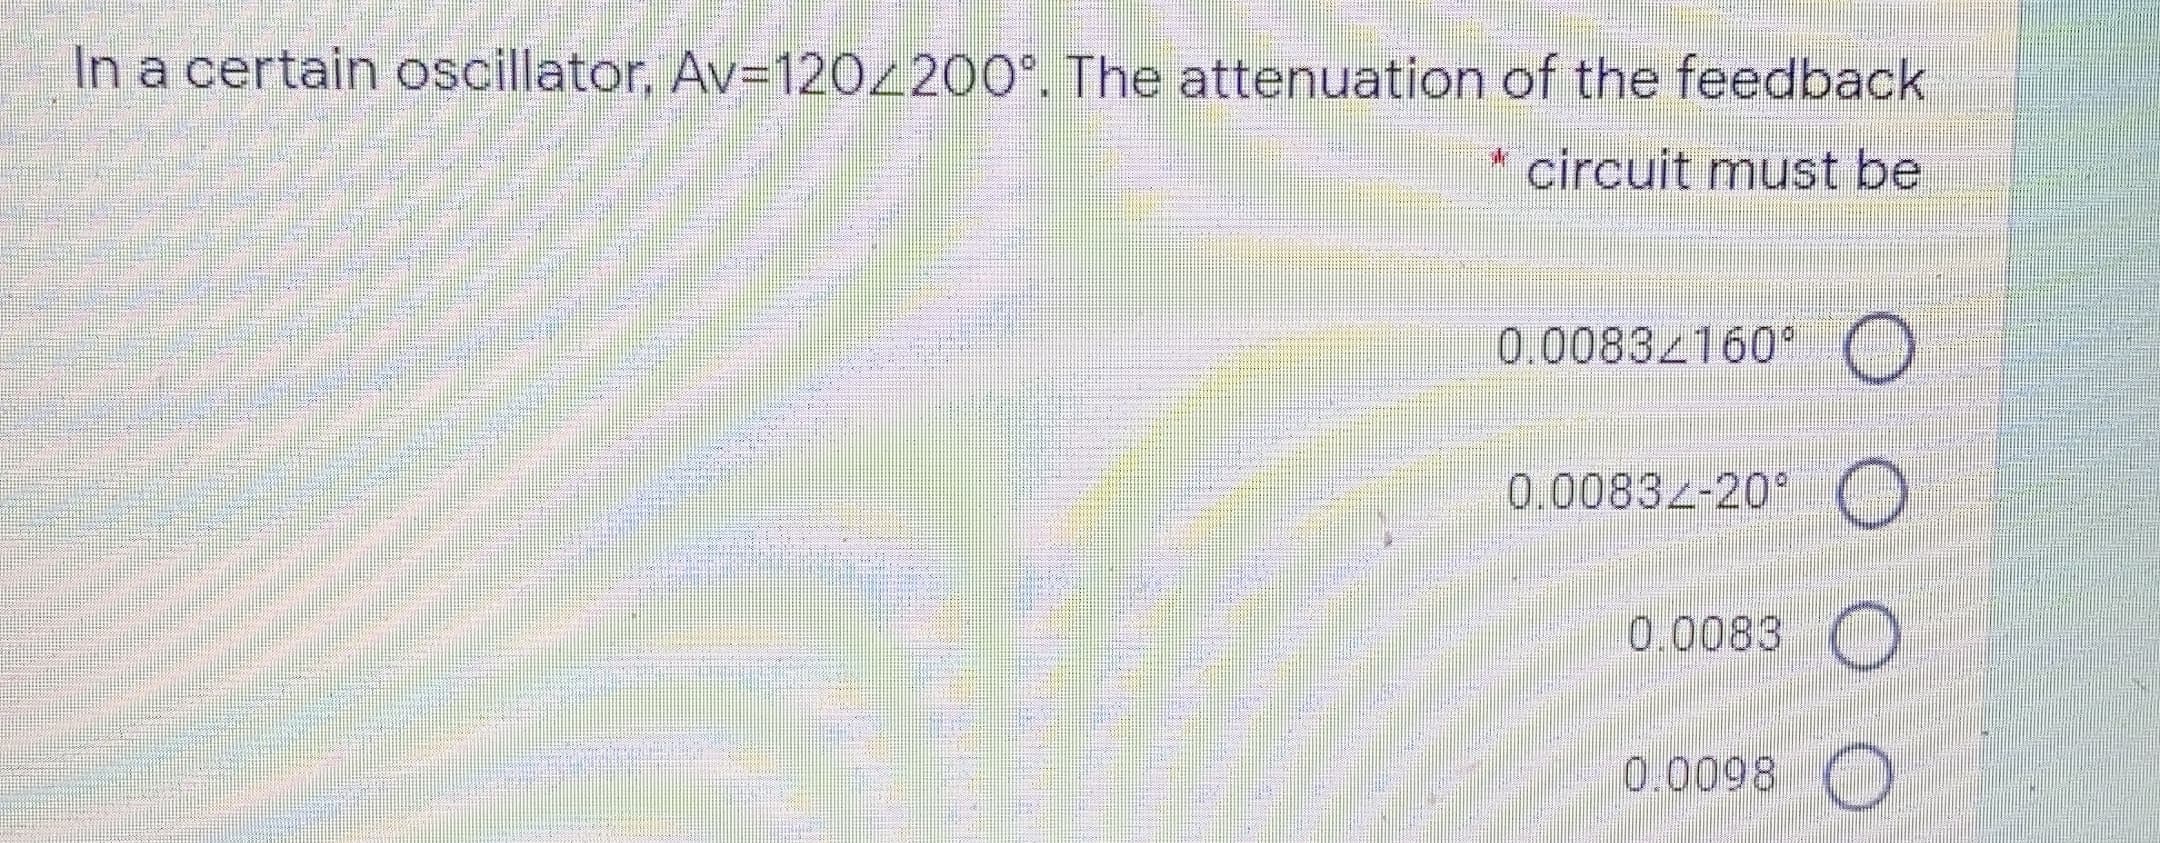 In a certain oscillator, Av=120z200°. The attenuation of the feedback
circuit must be
0.0083/160
0.0083z-20
0.0083
0.0098
